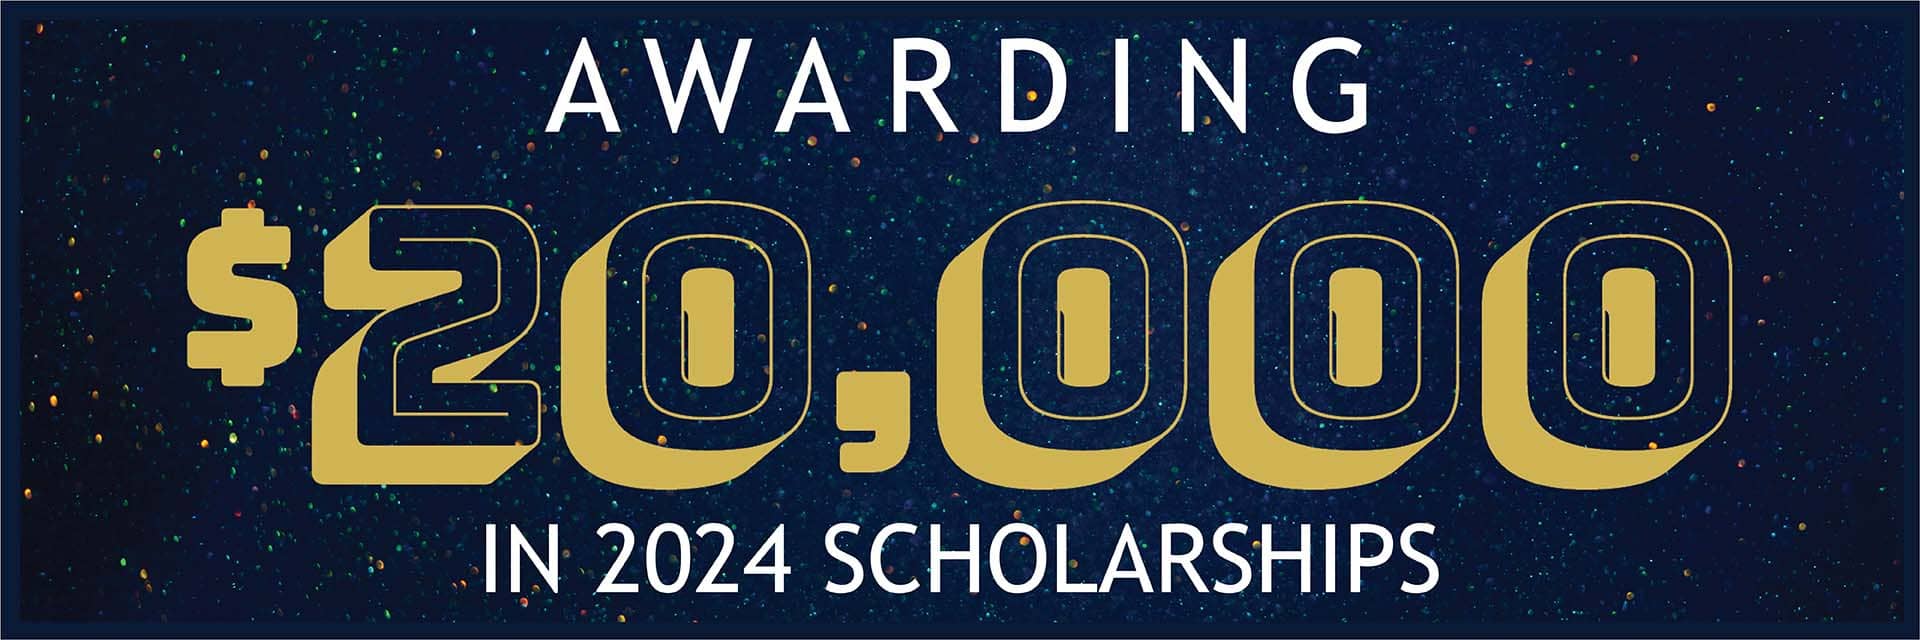 Awarding $20,000 in 2024 Scholarships